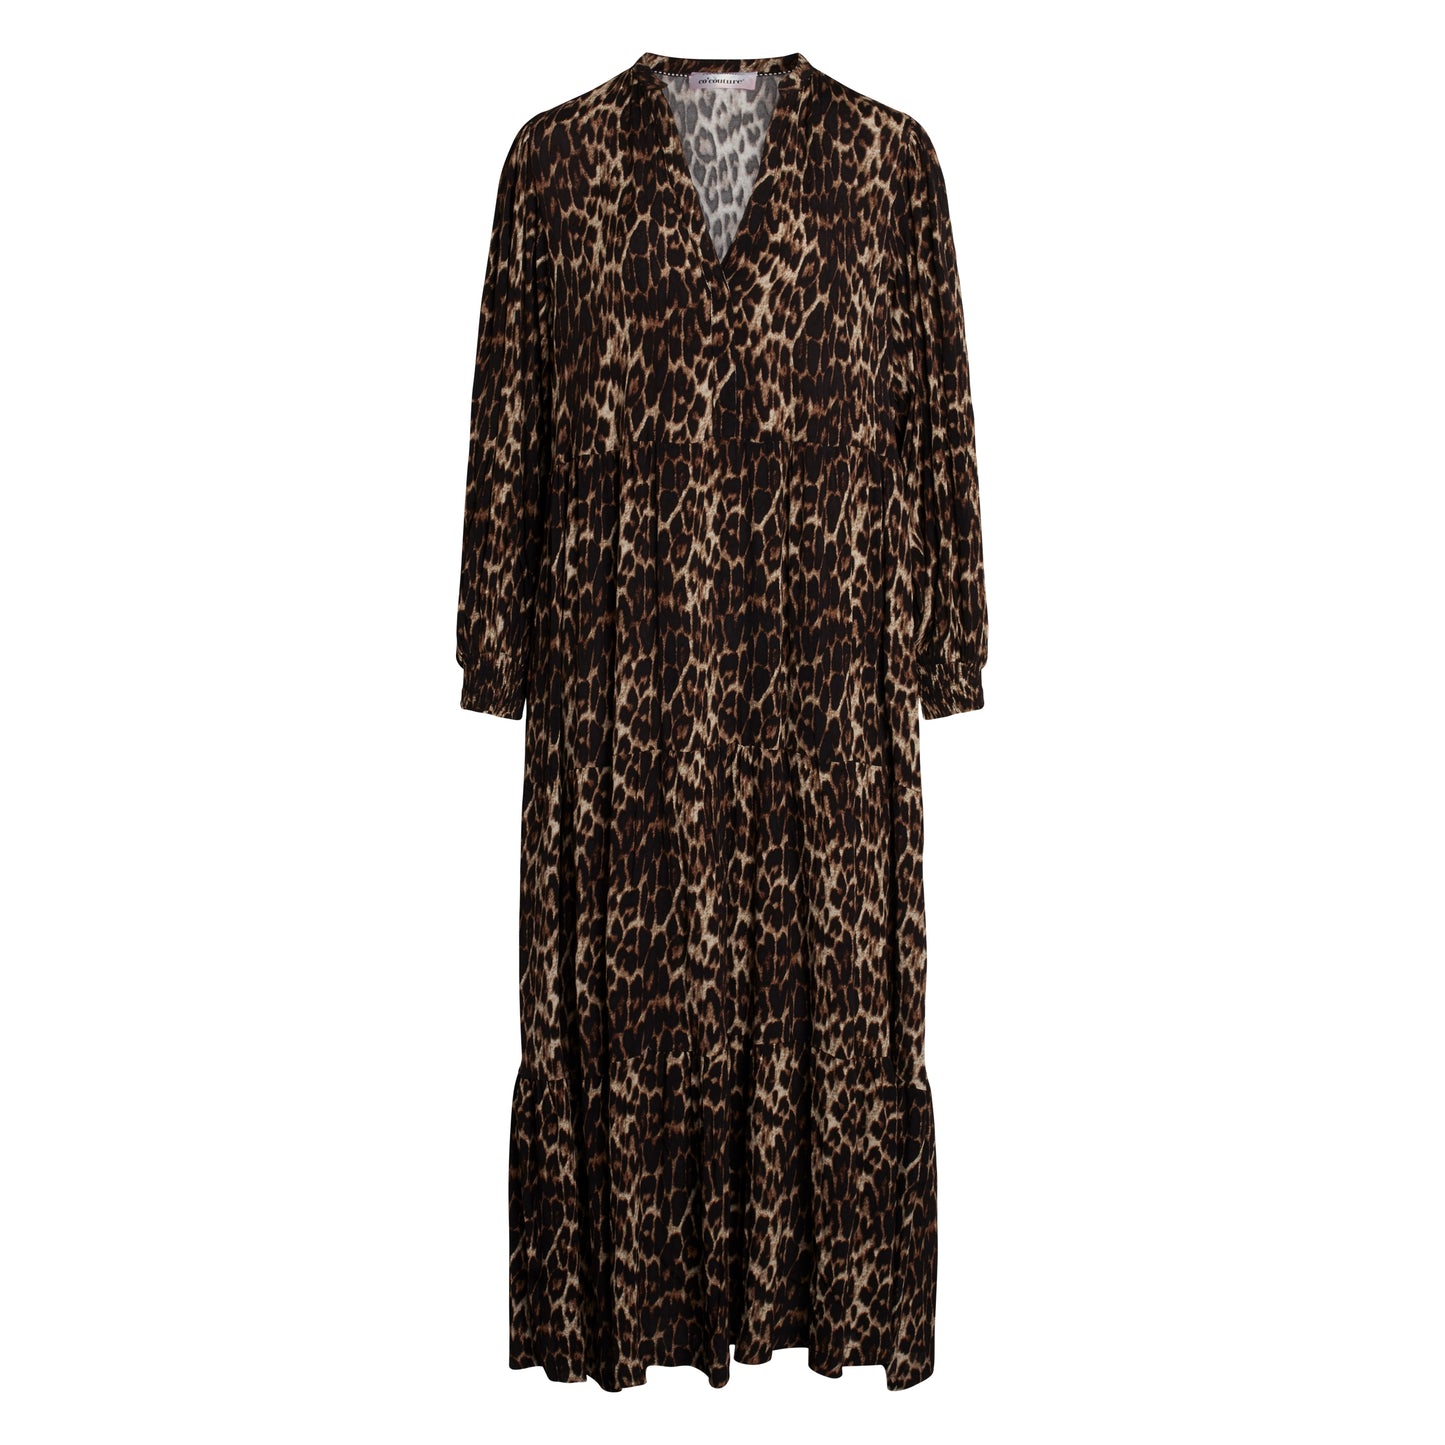 Co'couture - Nabia kjole - Leopard 